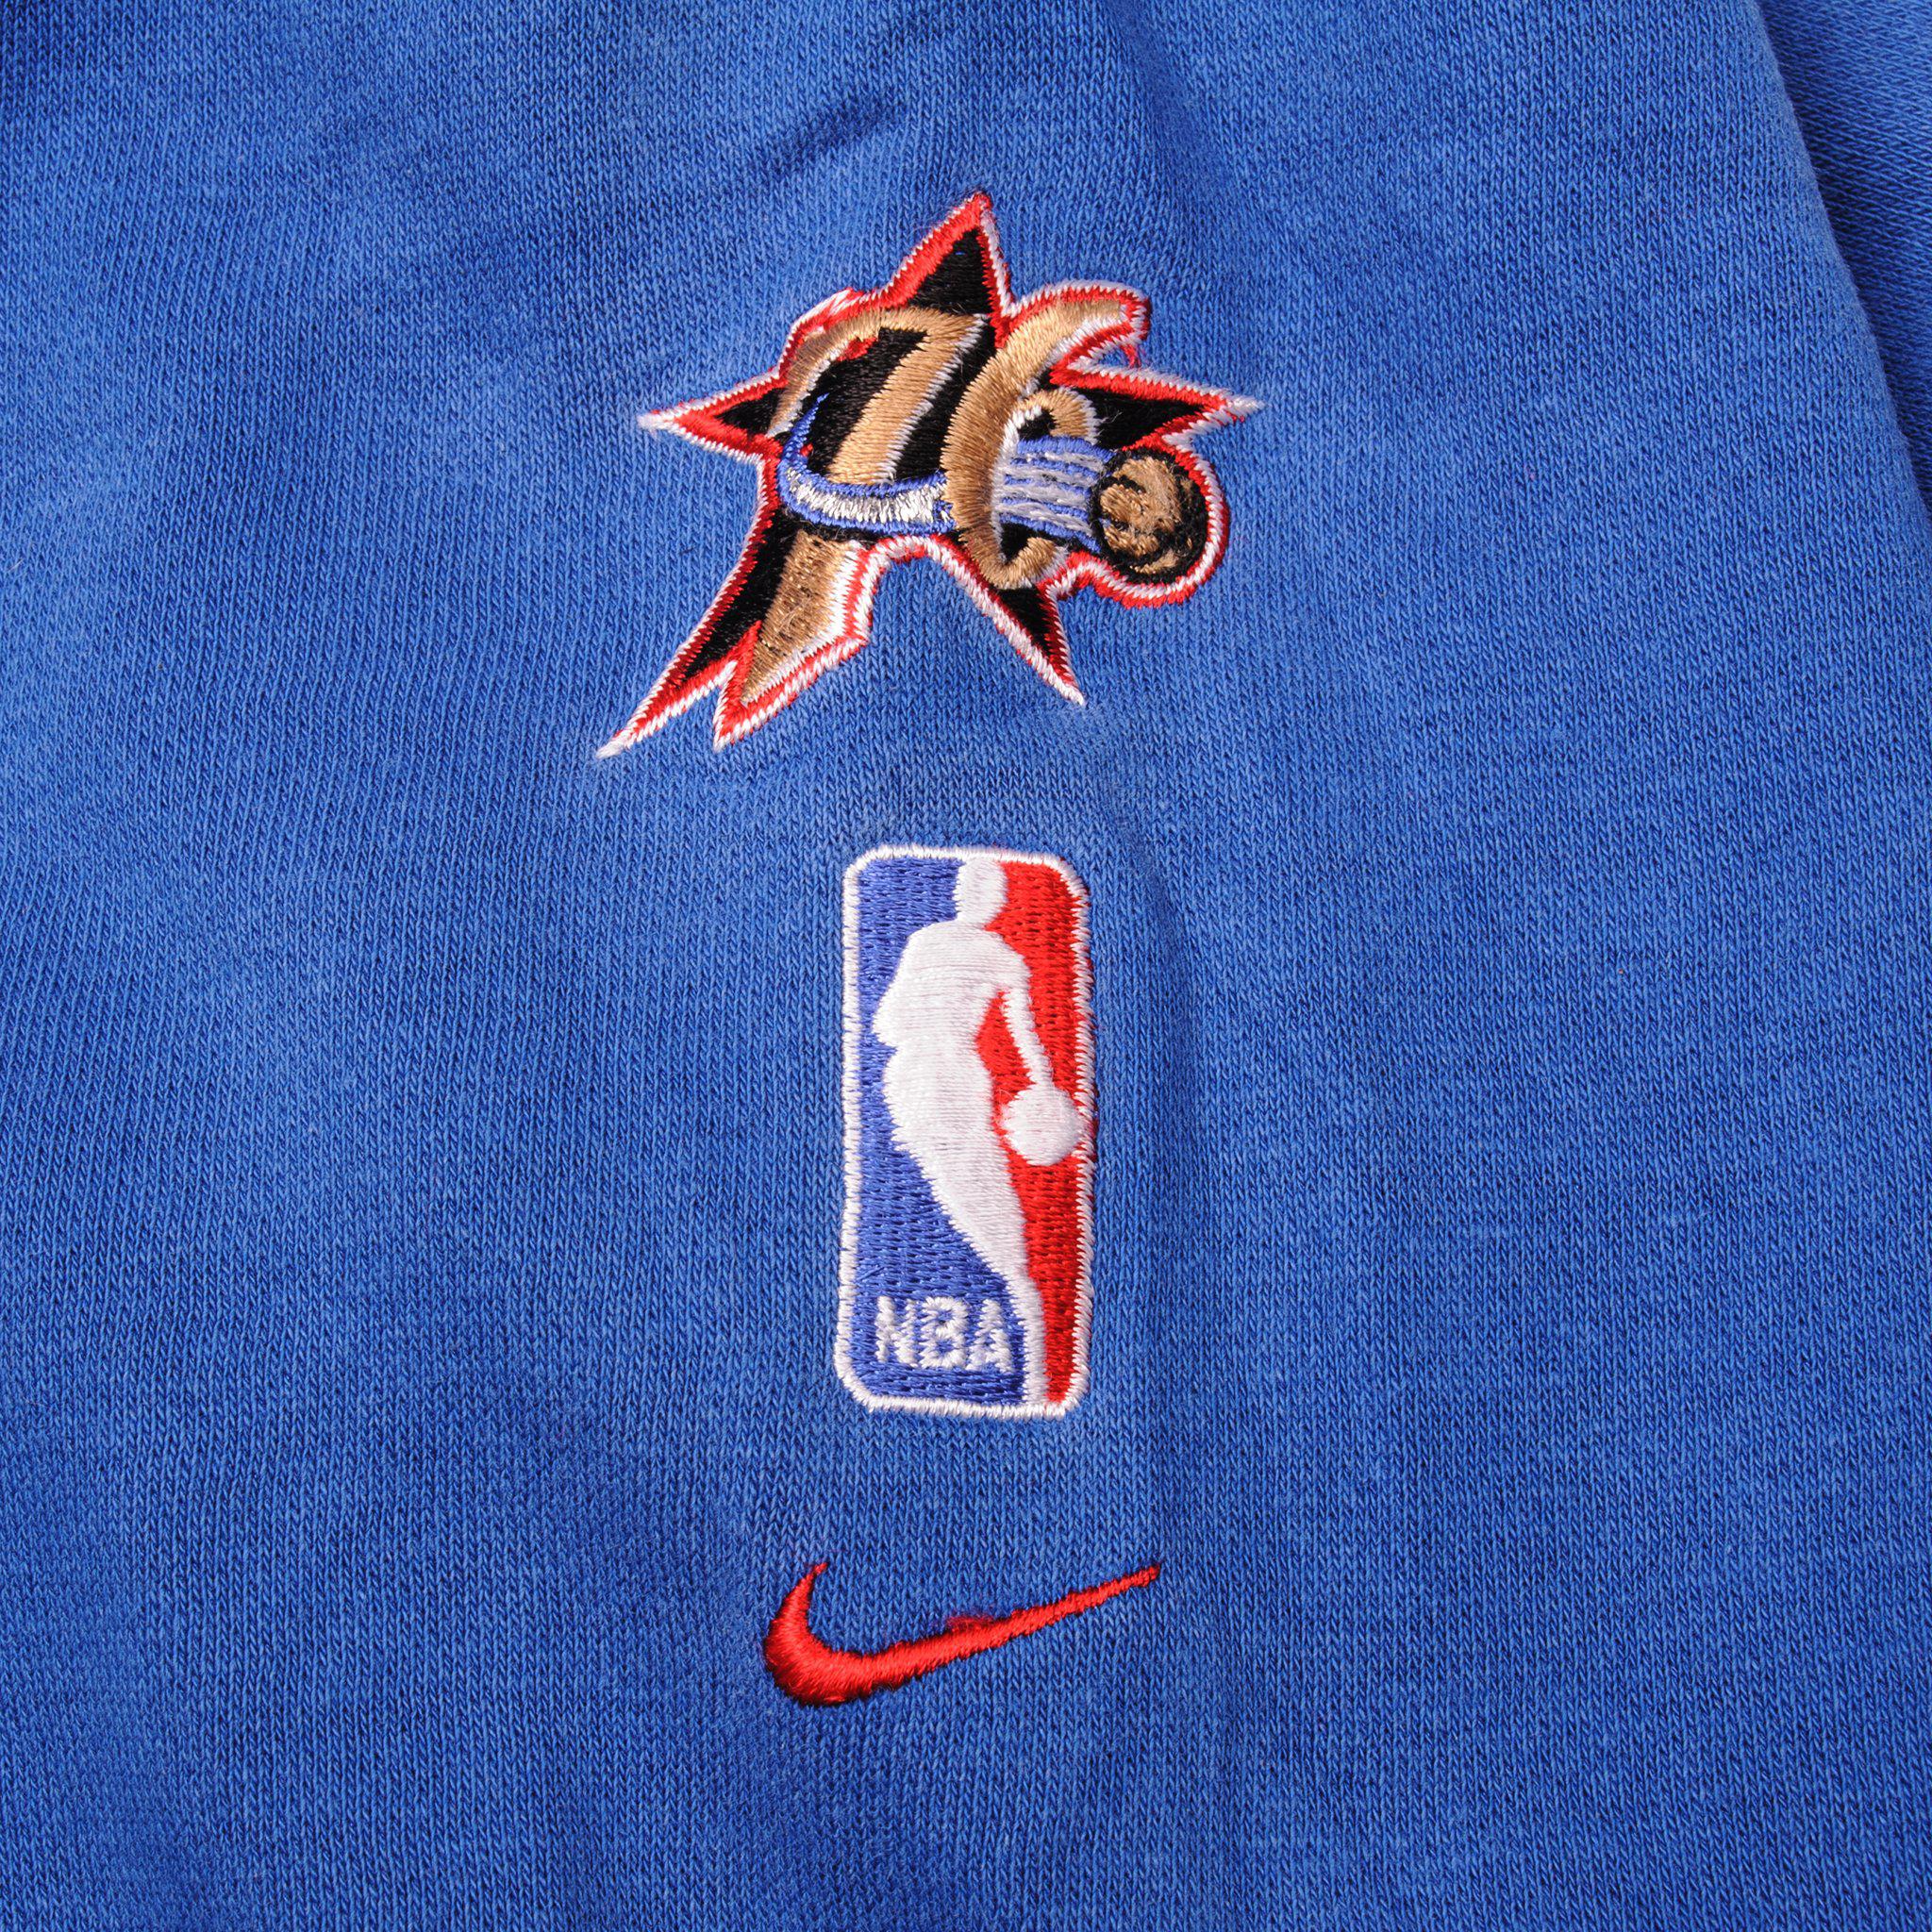 Philadelphia 76ers Club Men's Nike NBA Pullover Hoodie. Nike LU